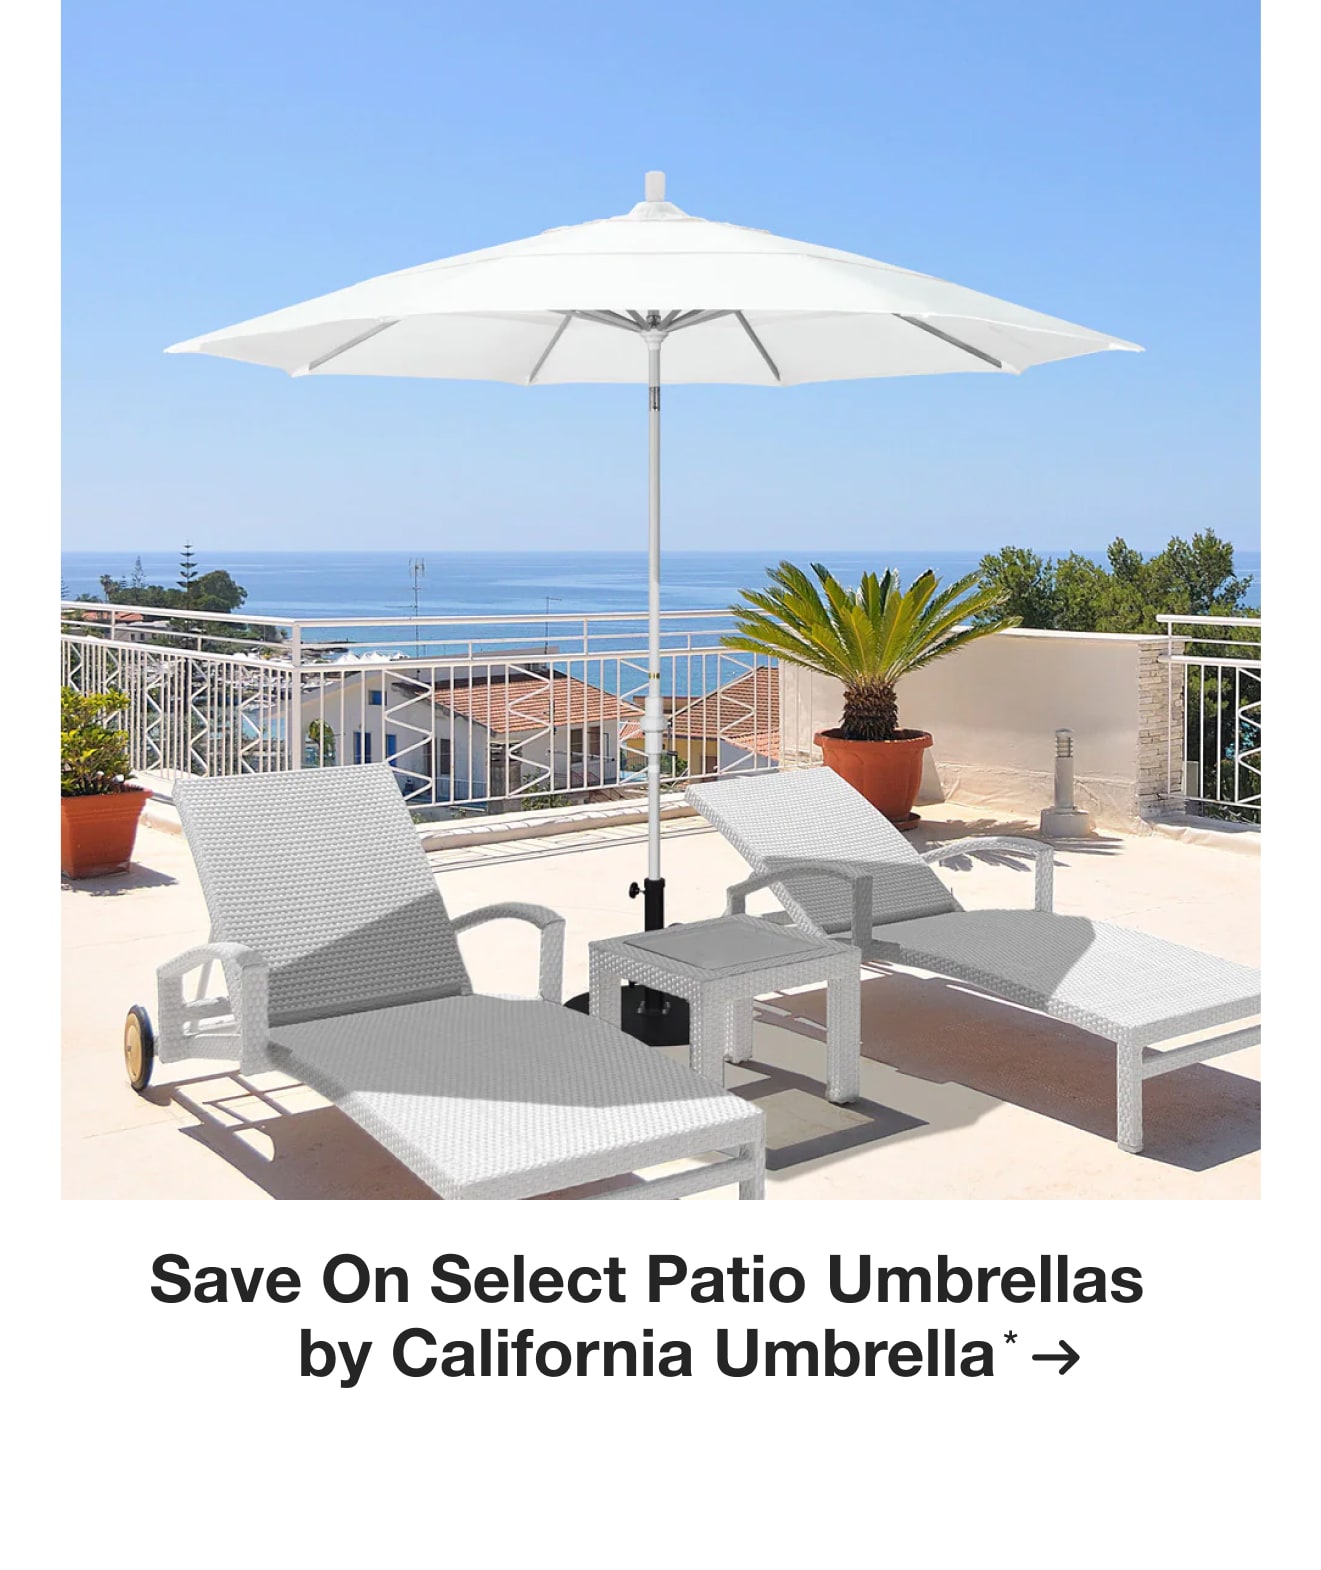 Save On Select Patio Umbrellas by California Umbrella